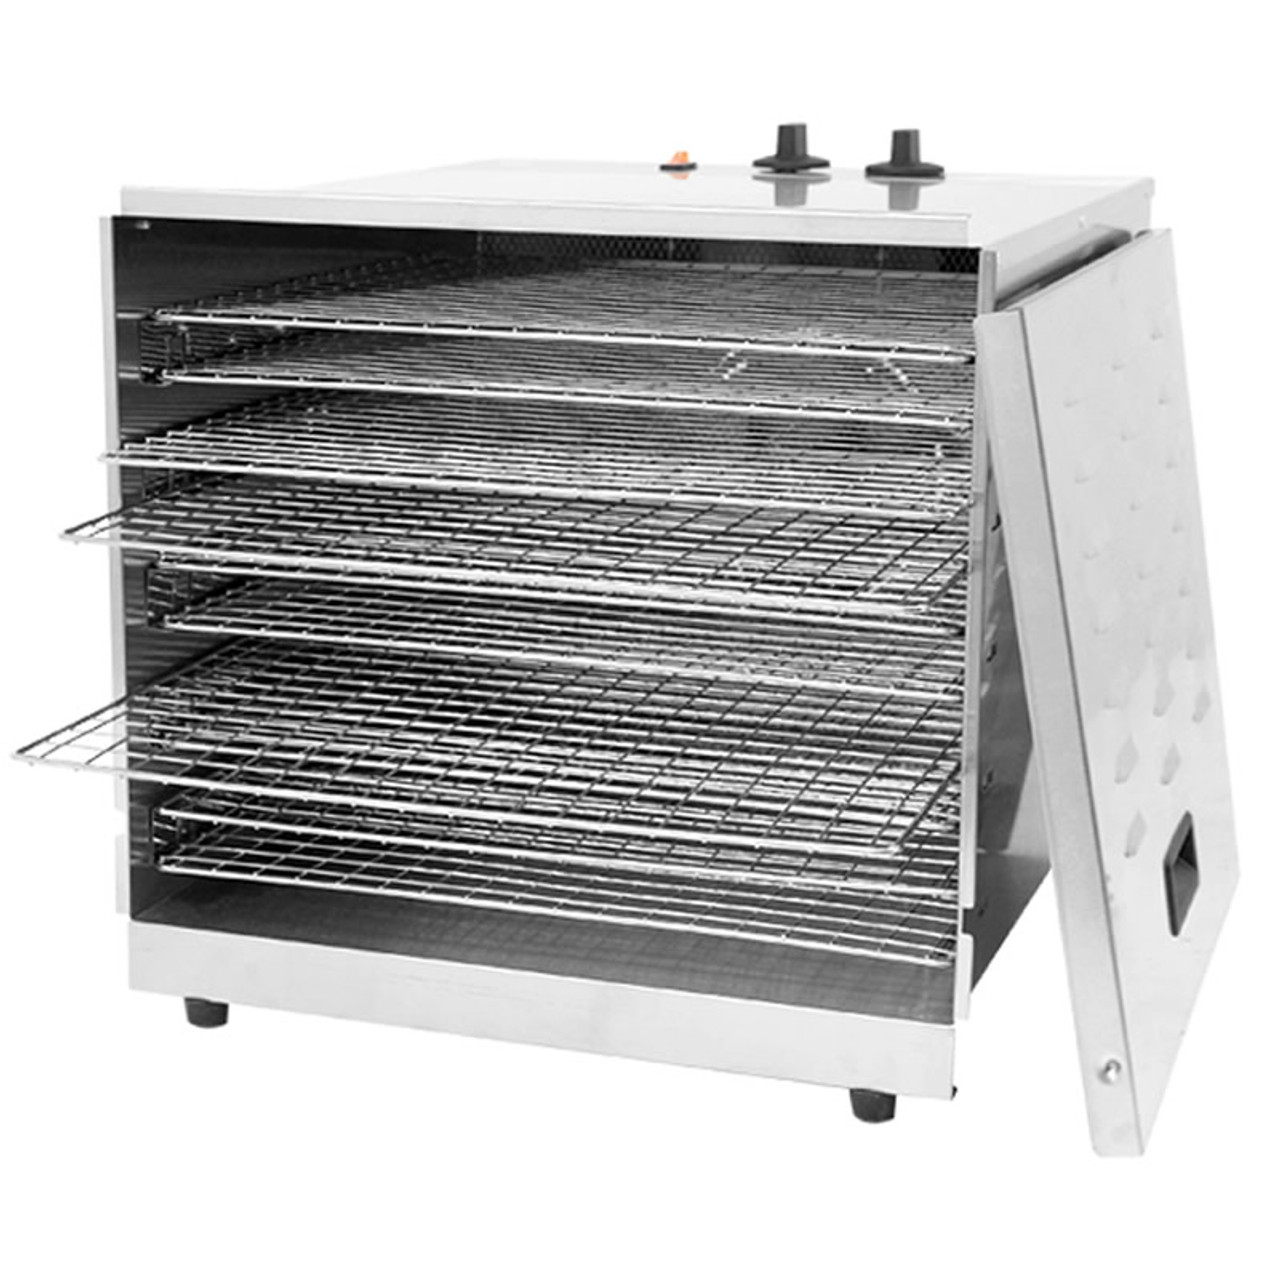 Weston 74-1001-W 10 Tray Stainless Steel Food Dehydrator